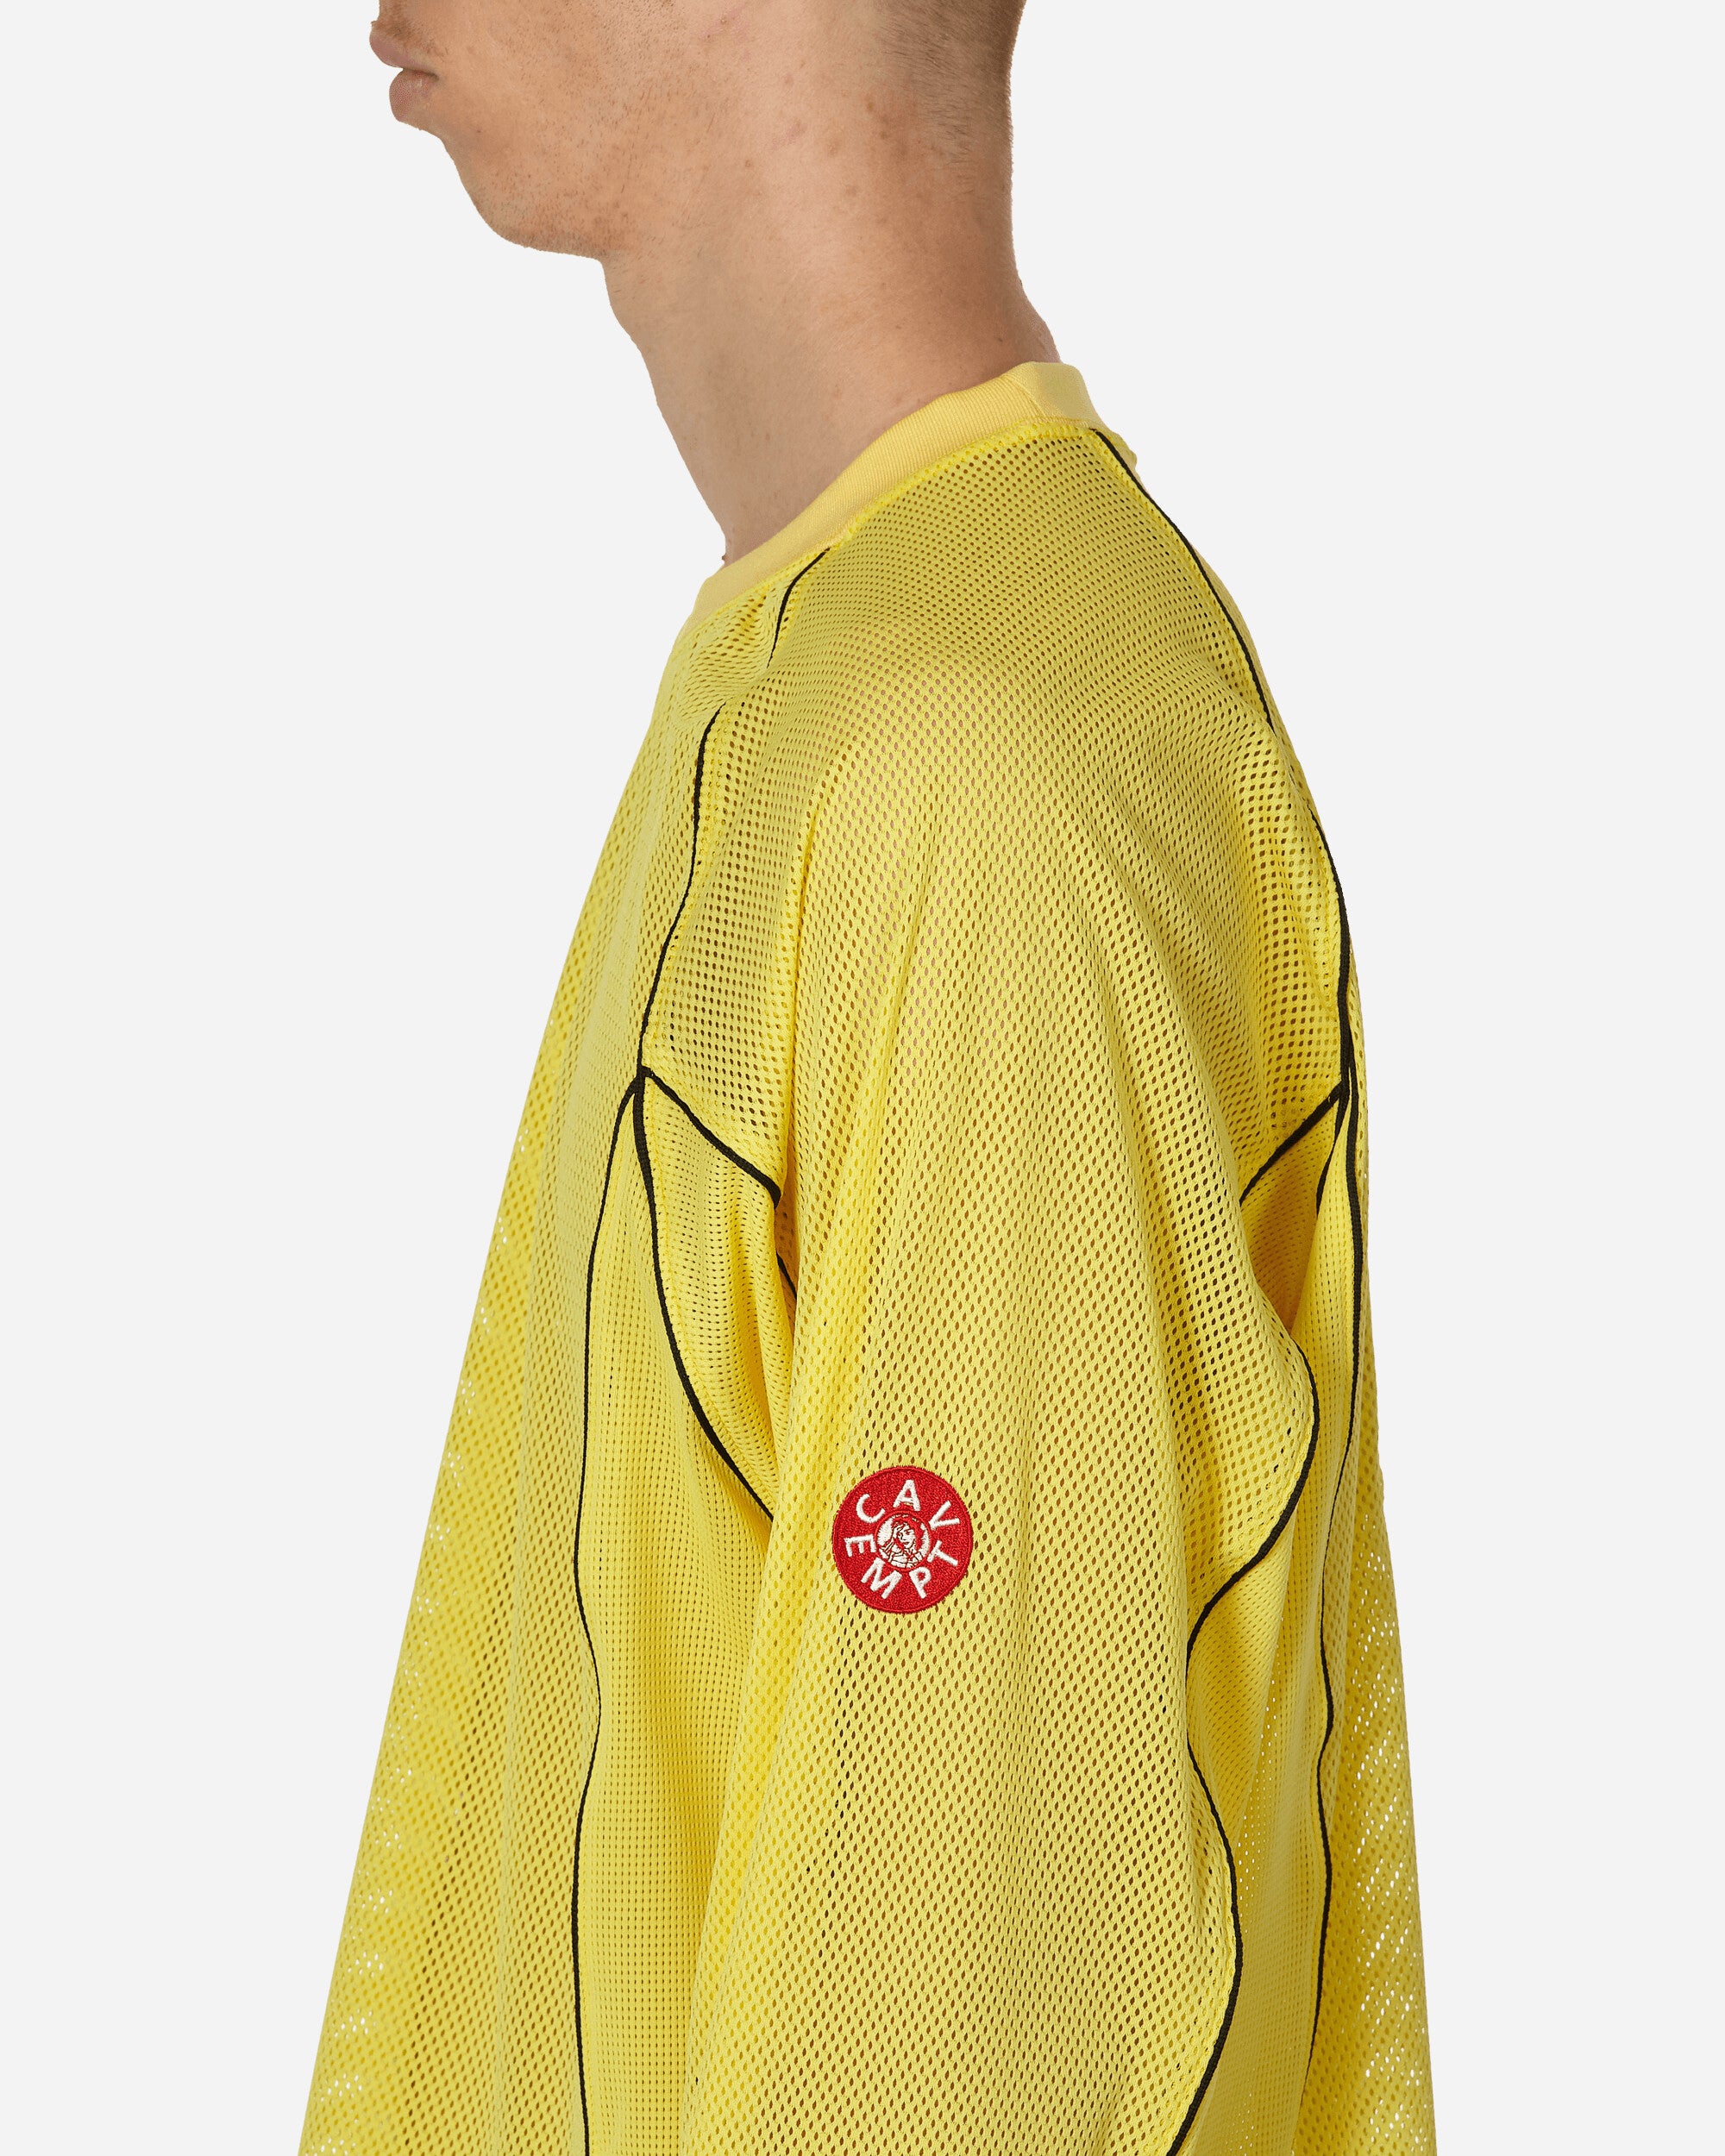 Cav Empt Mesh Raglan Colour Long Sleeve T Yellow Grey-Yellow T-Shirts Longsleeve CES24LT05 001